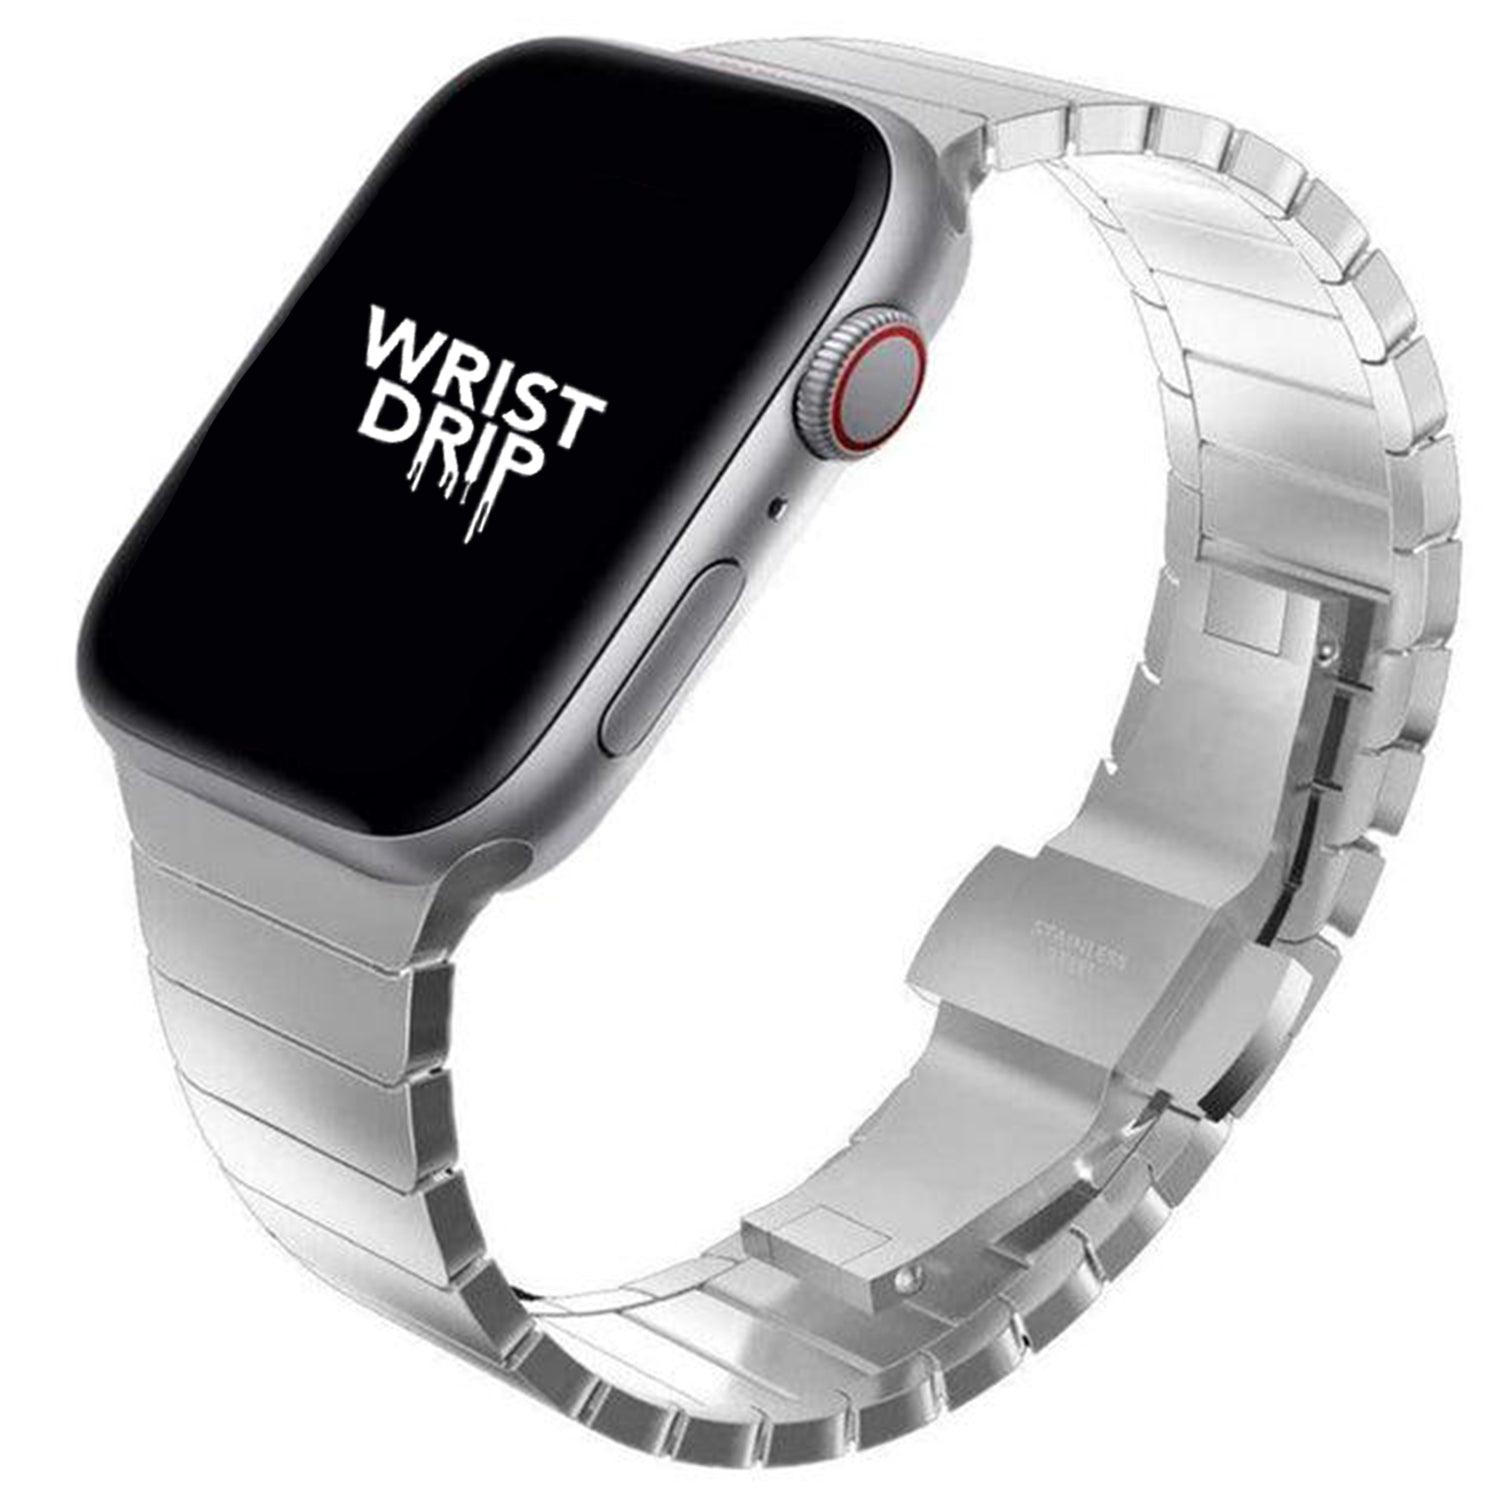 The Pulseira Apple Watch Band (6 Colours) - shopwristdrip